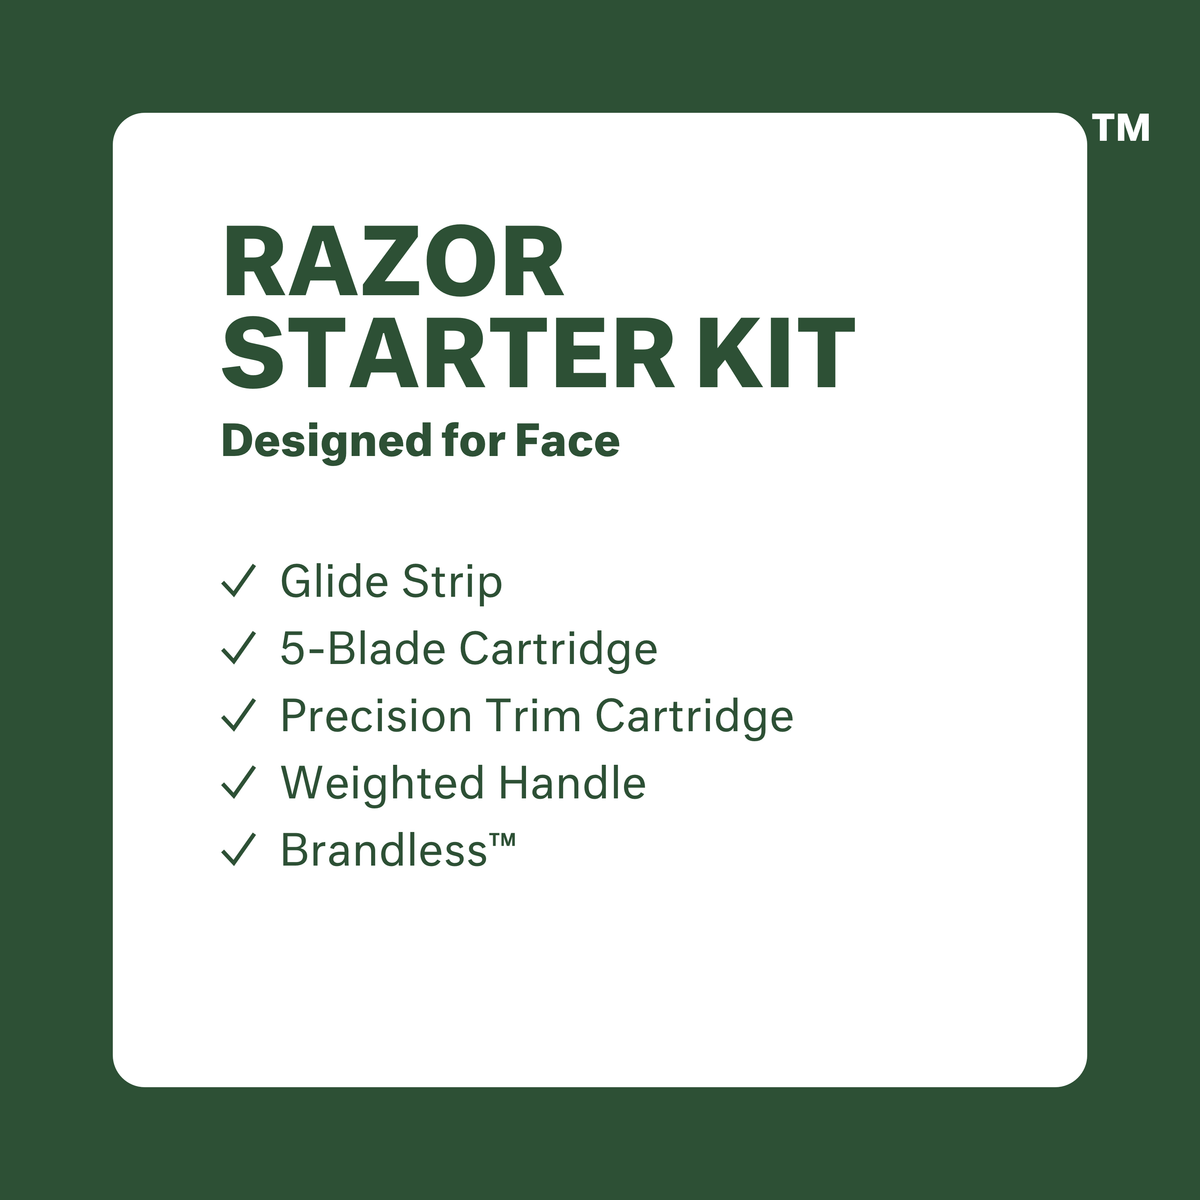 Razor Starter Kit, Designed for face. Glide strip, 5-blade cartridge, precision trim cartridge, weighted handle, brandless.